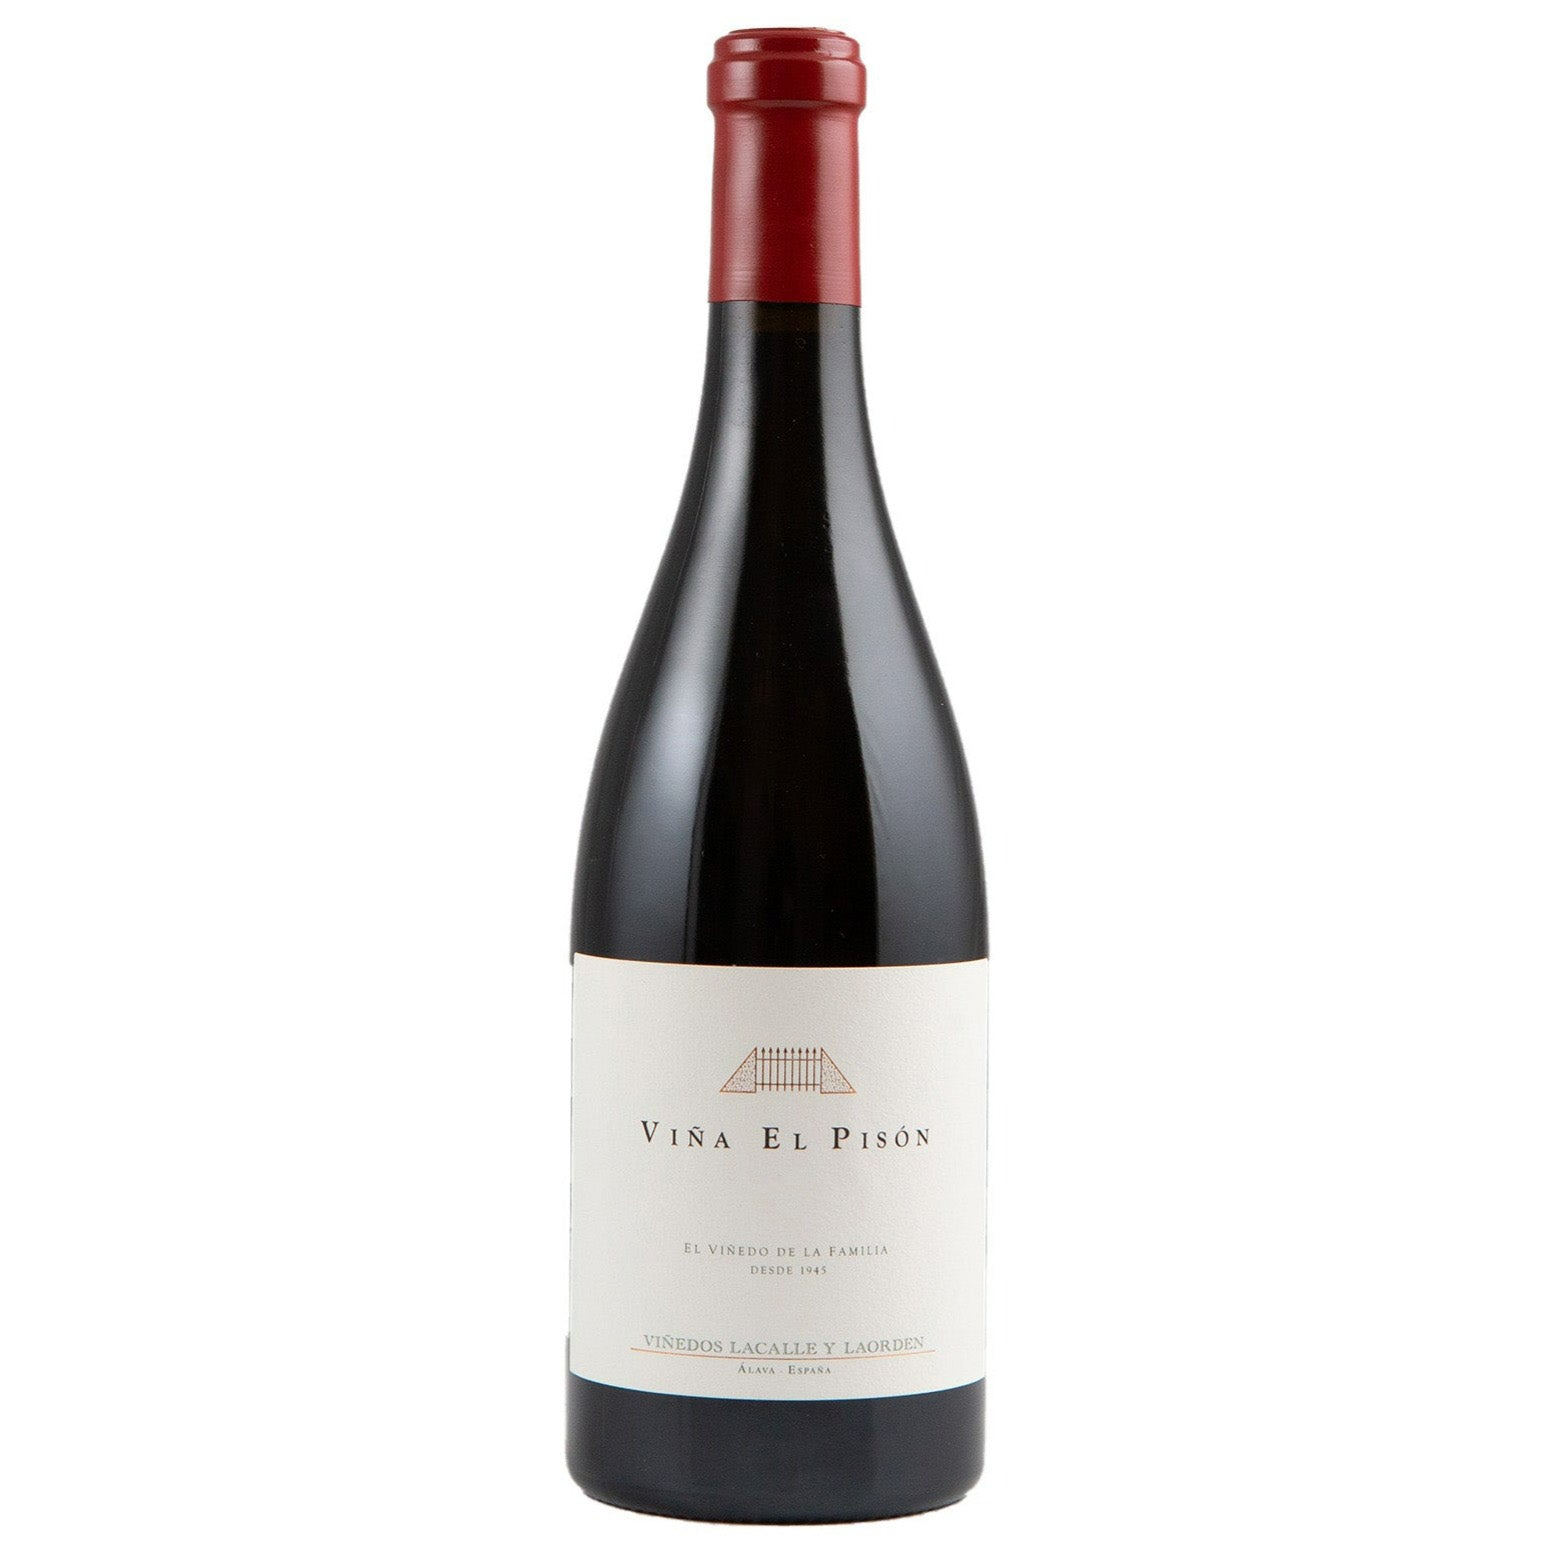 Single bottle of Red wine Artadi, Vina El Pison, Rioja Alavesa, 2017 100% Tempranillo